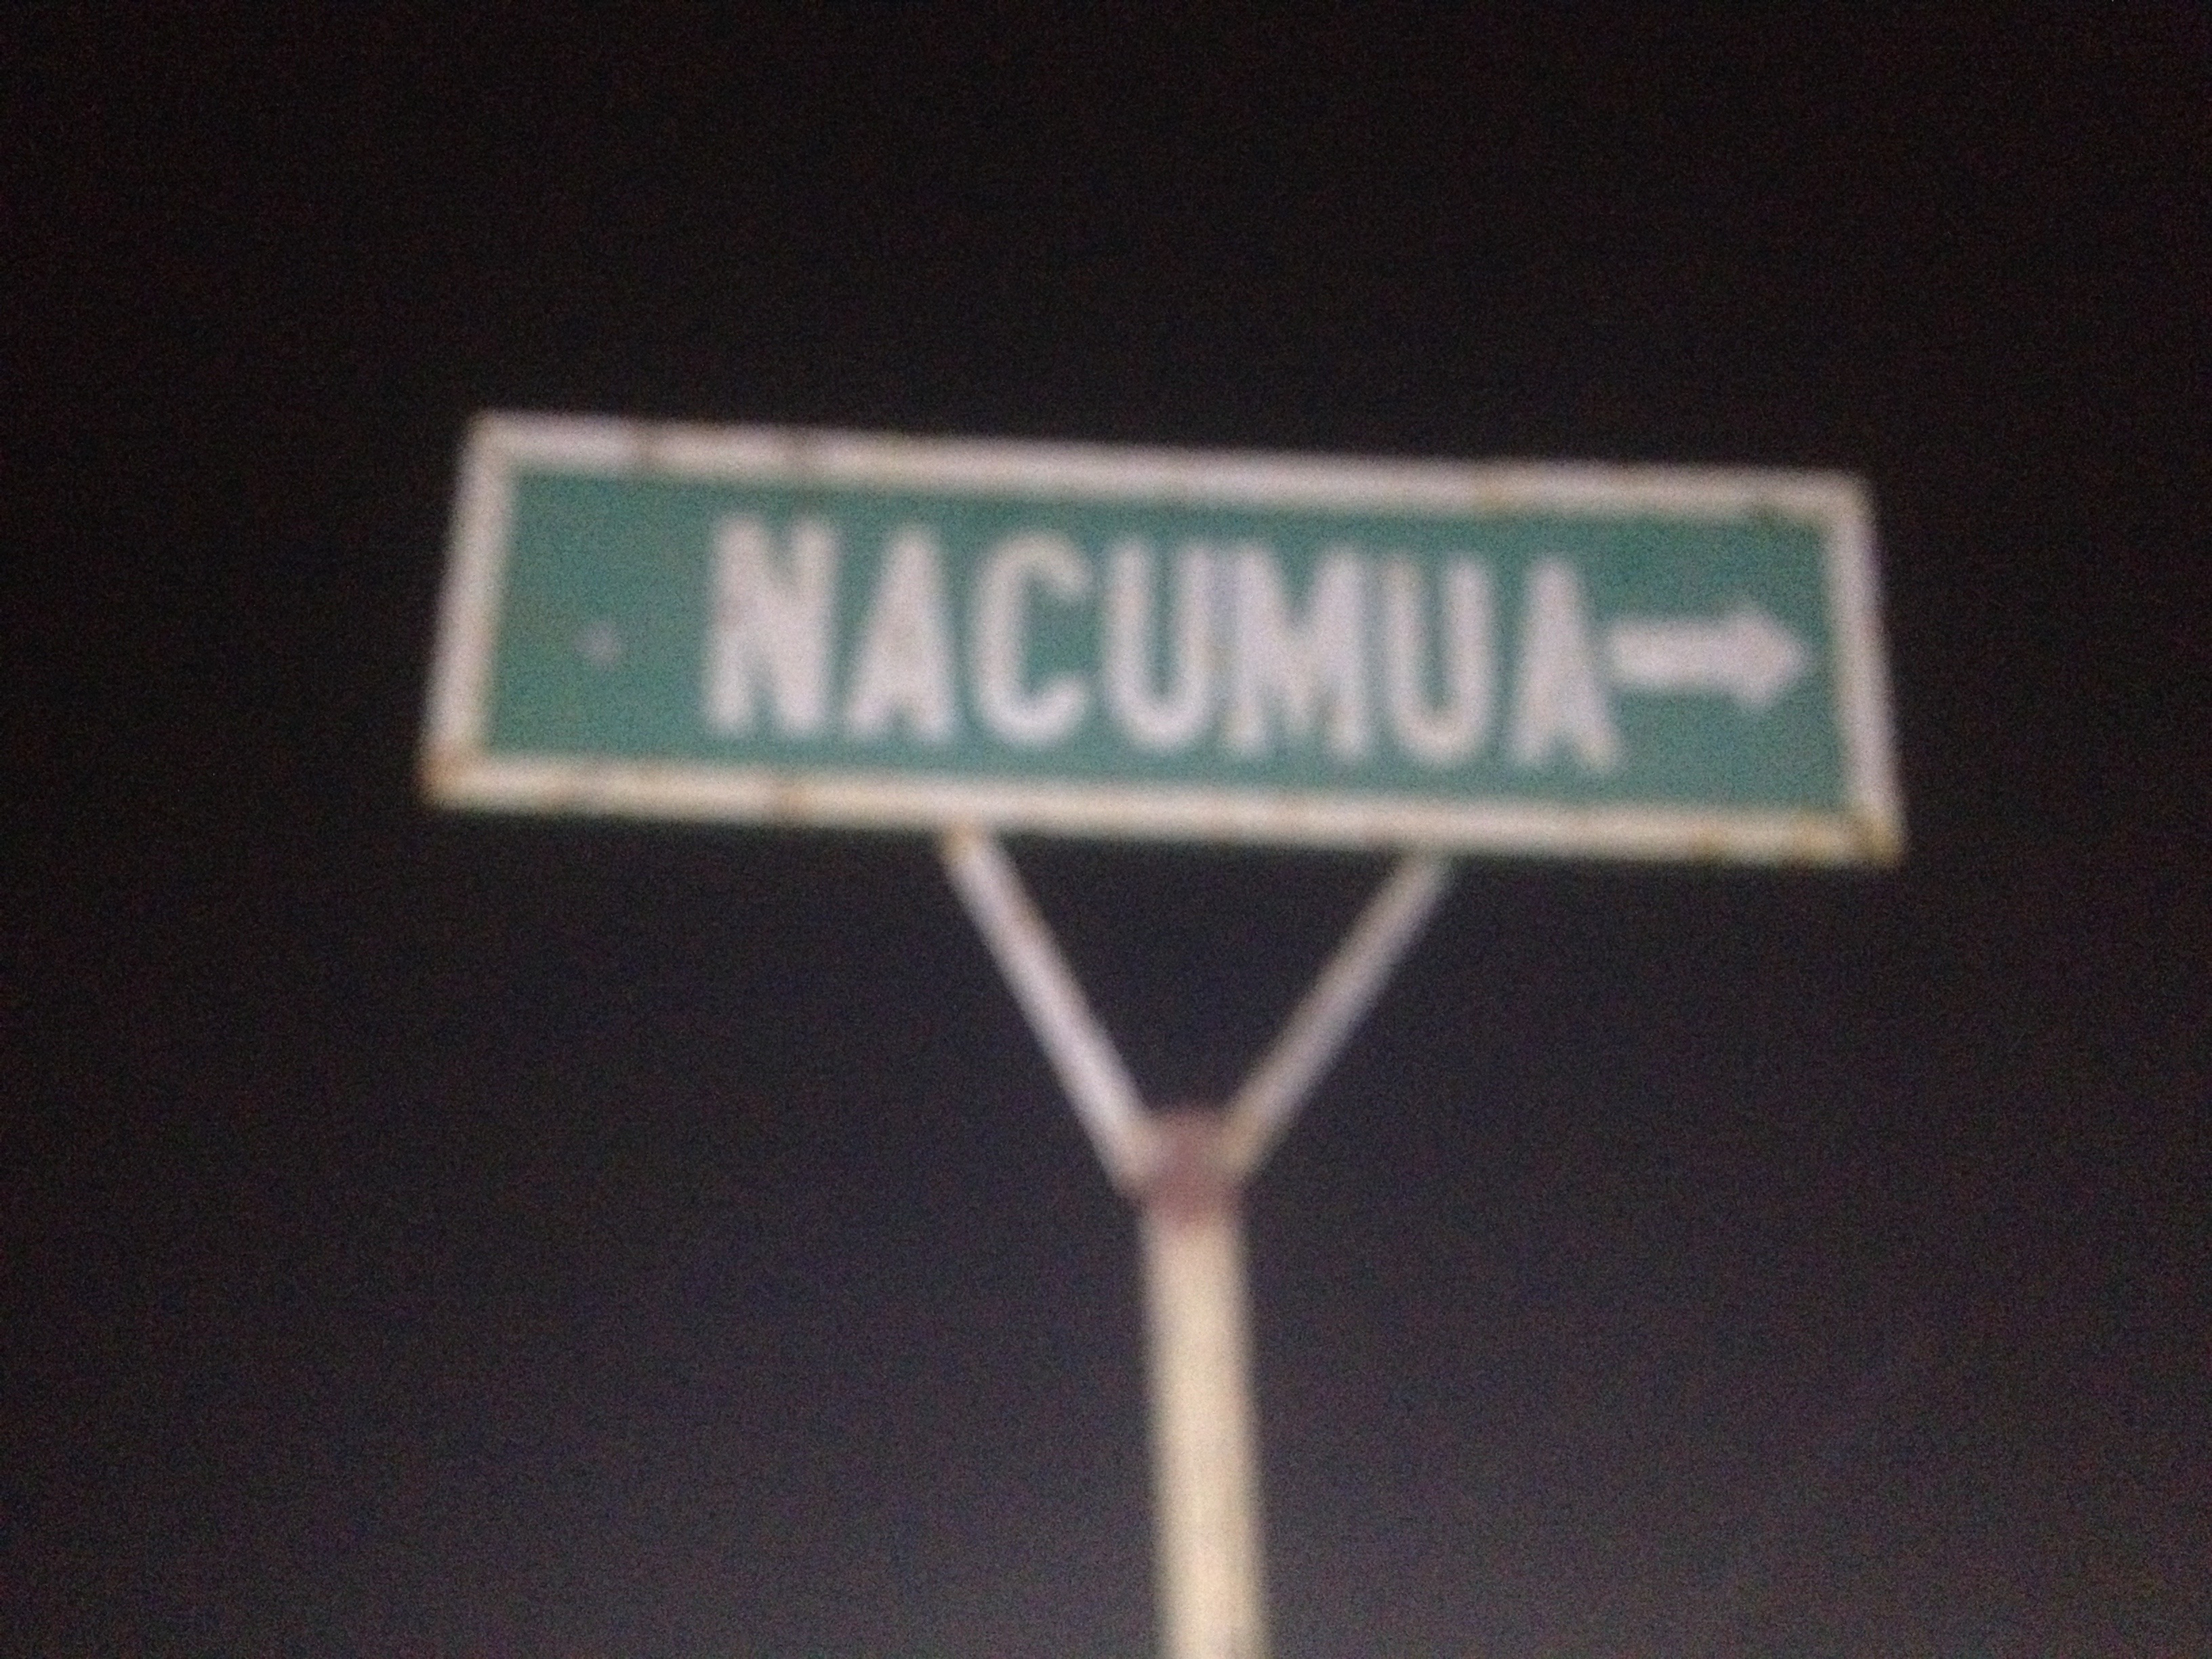 Nacumua sign.jpg